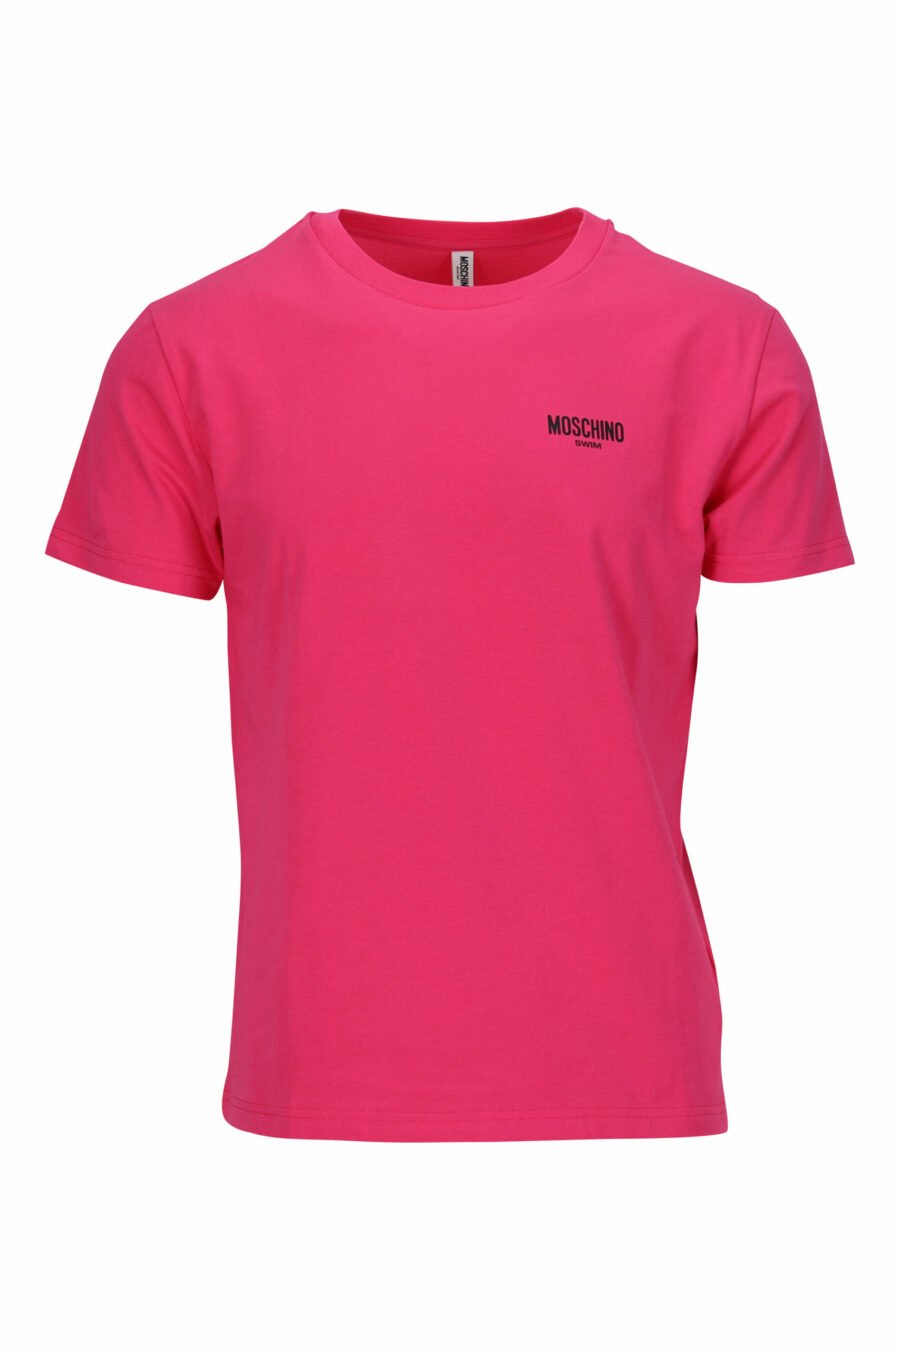 T-shirt fuchsia avec minilogue "nage" - 667113673301 échelonné